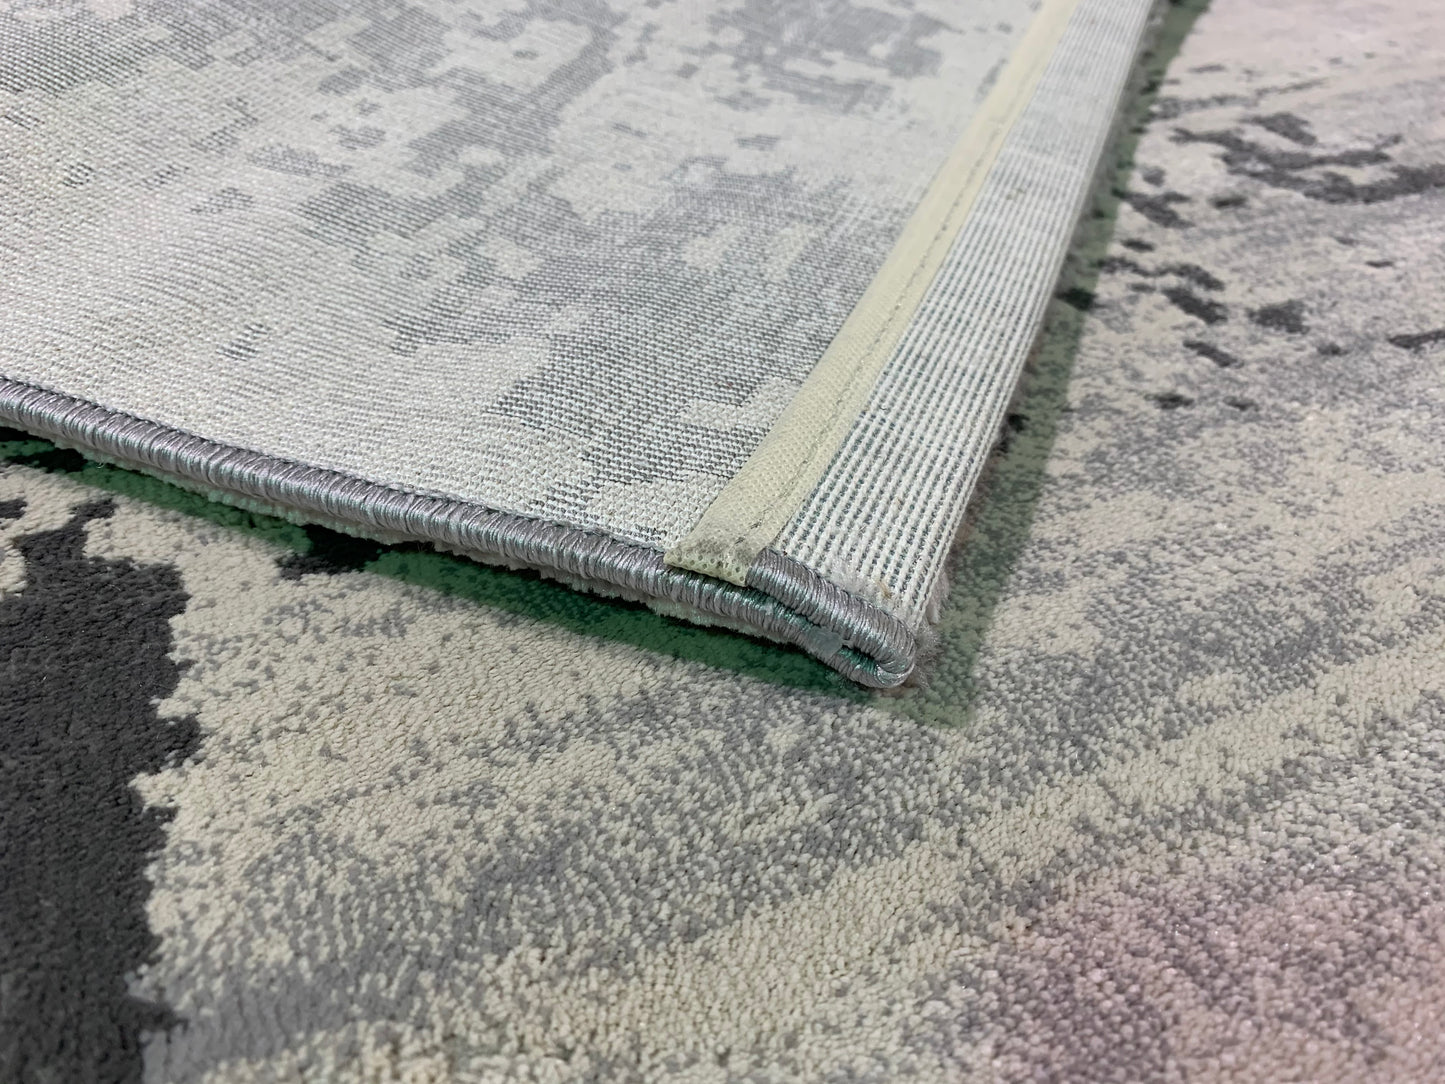 FL-201: Synthetic fiber rug